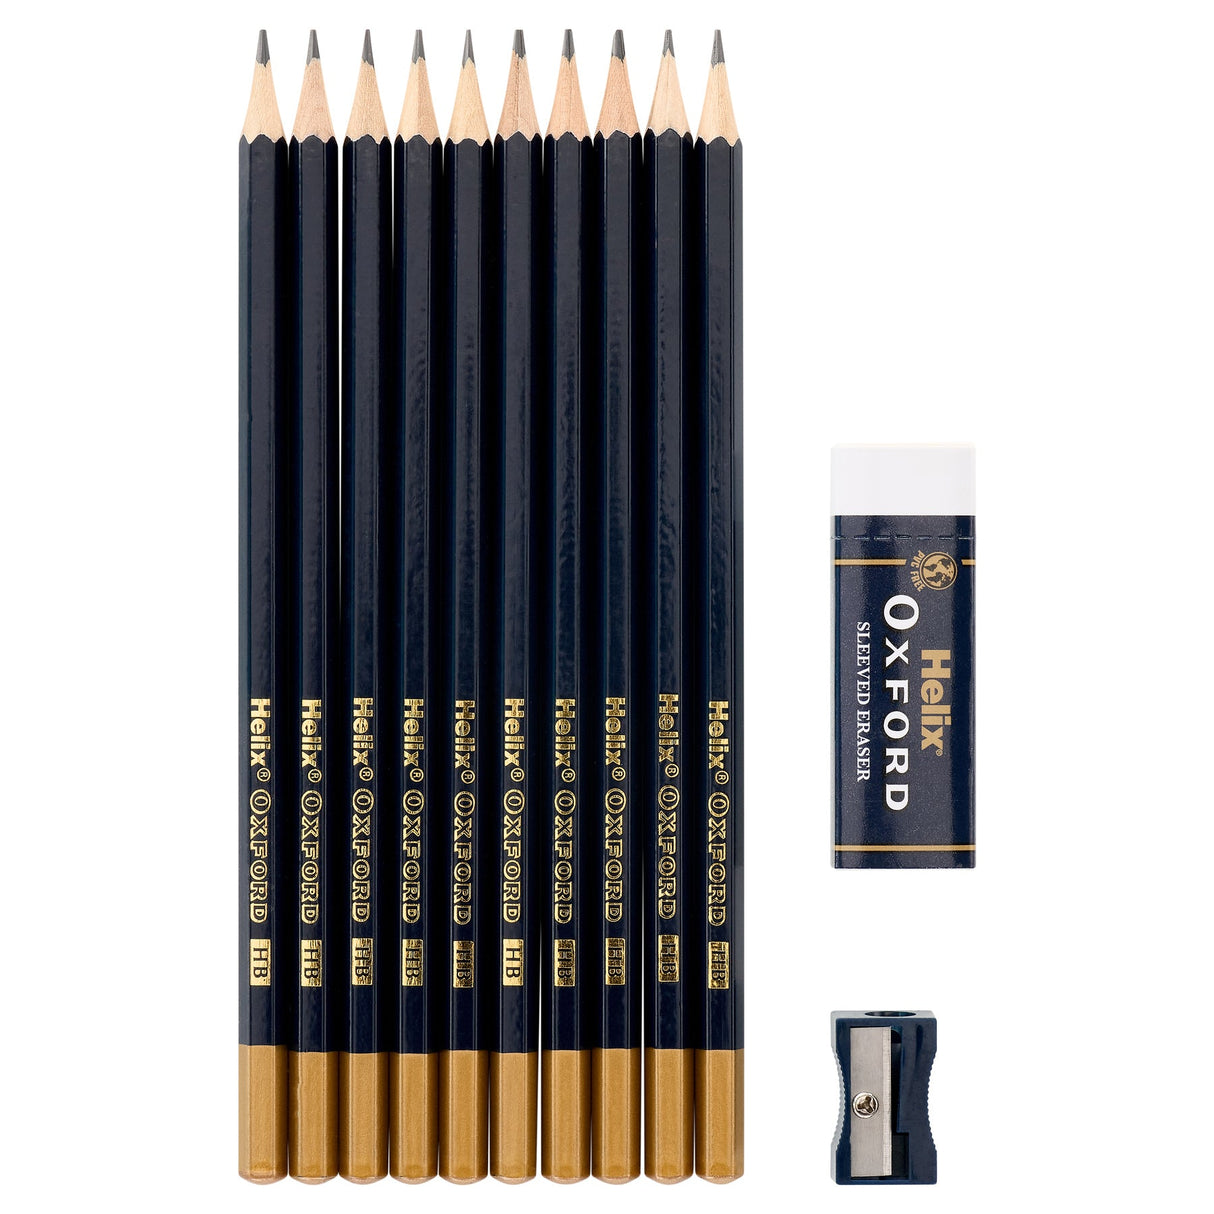 Helix Oxford School Pencil Set - HB 7 Pieces | Stationery Shop UK